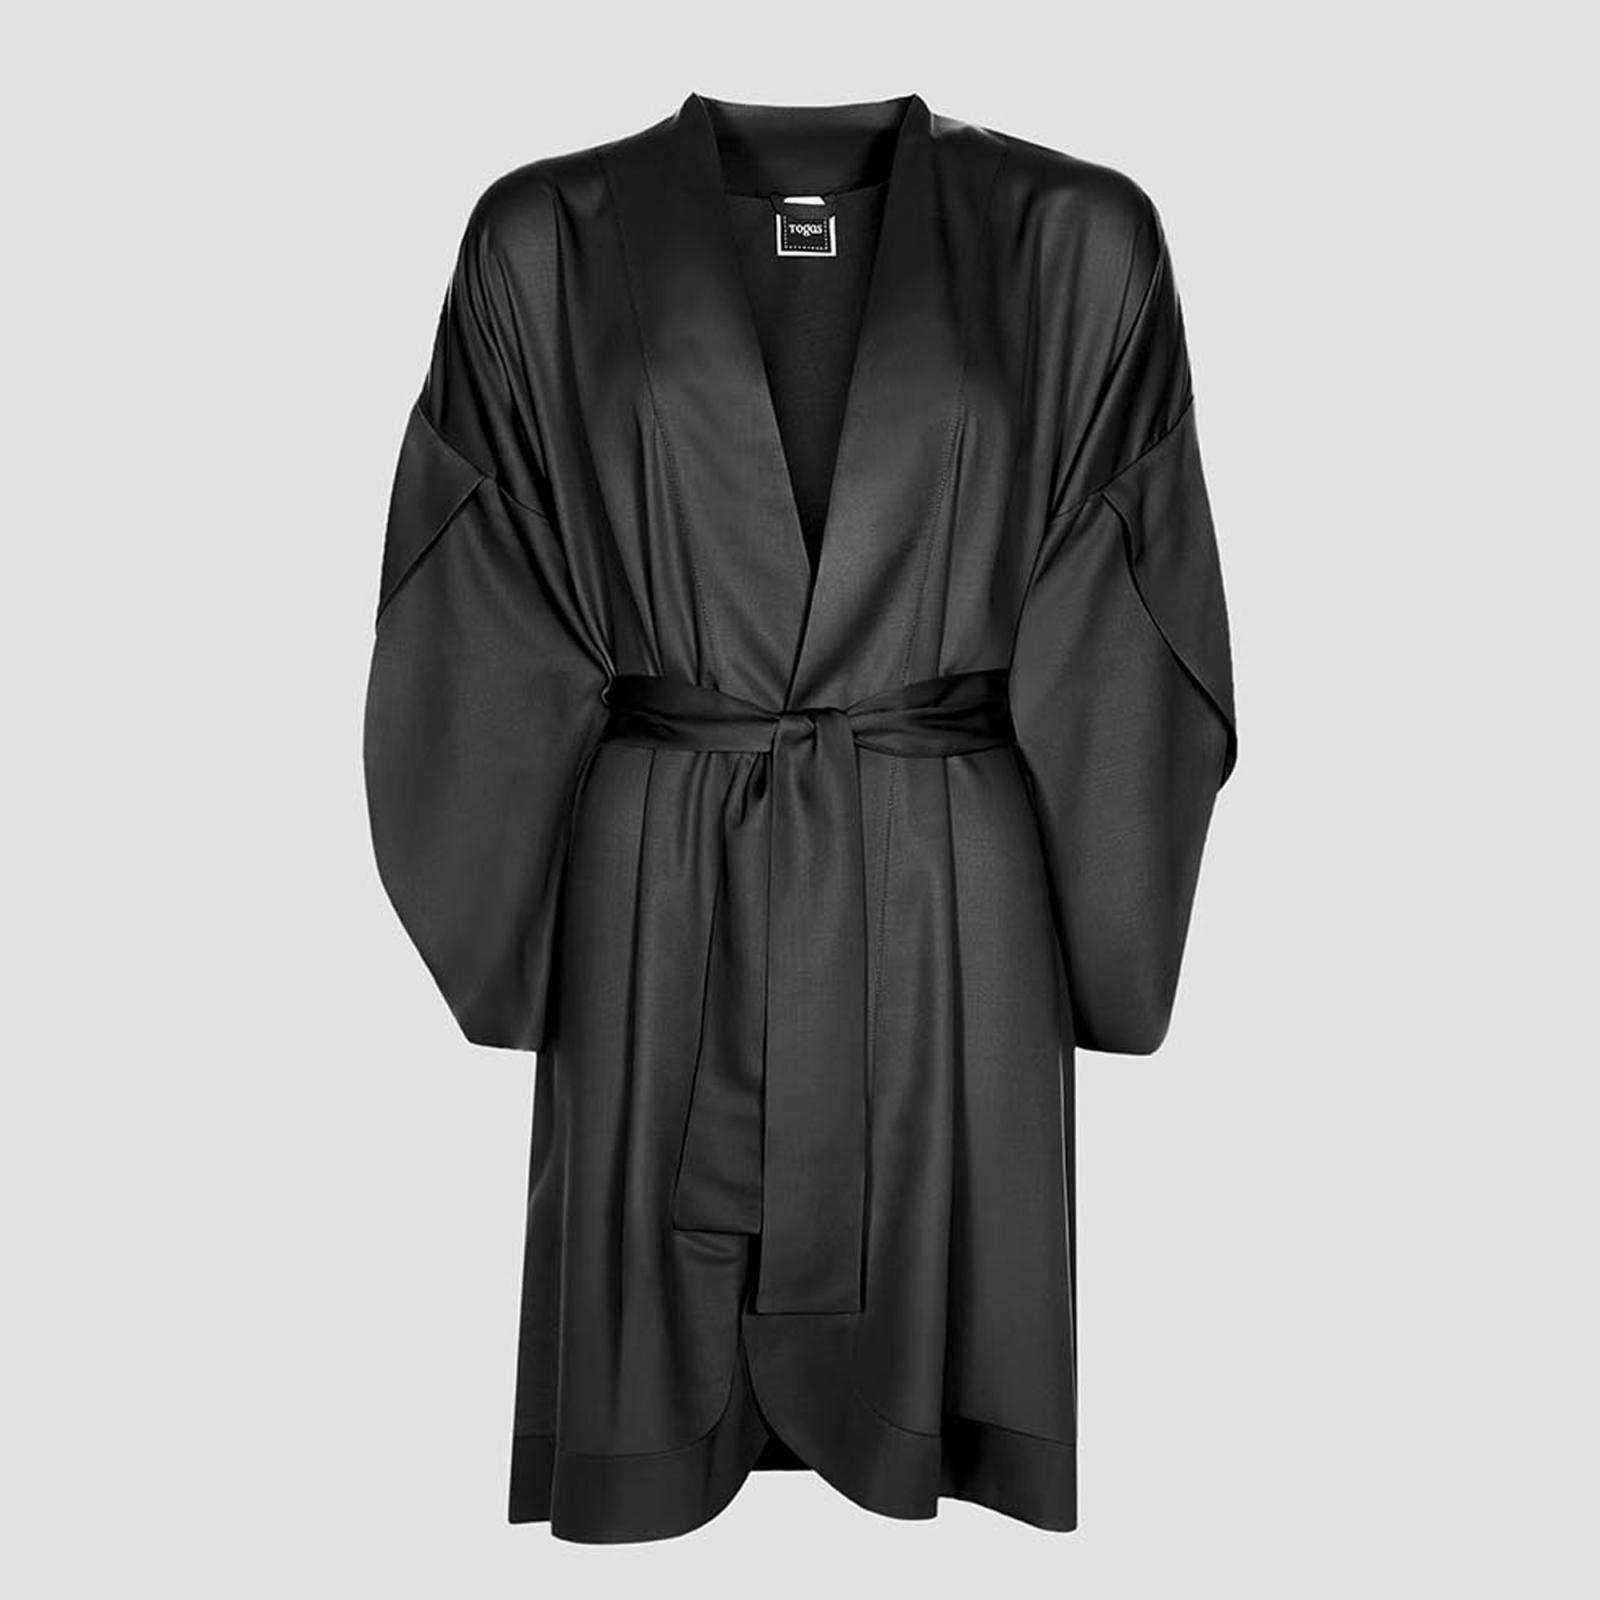 Халат-кимоно короткое Togas Наоми чёрное XS (42) халат кимоно togas наоми зеленый xl 50